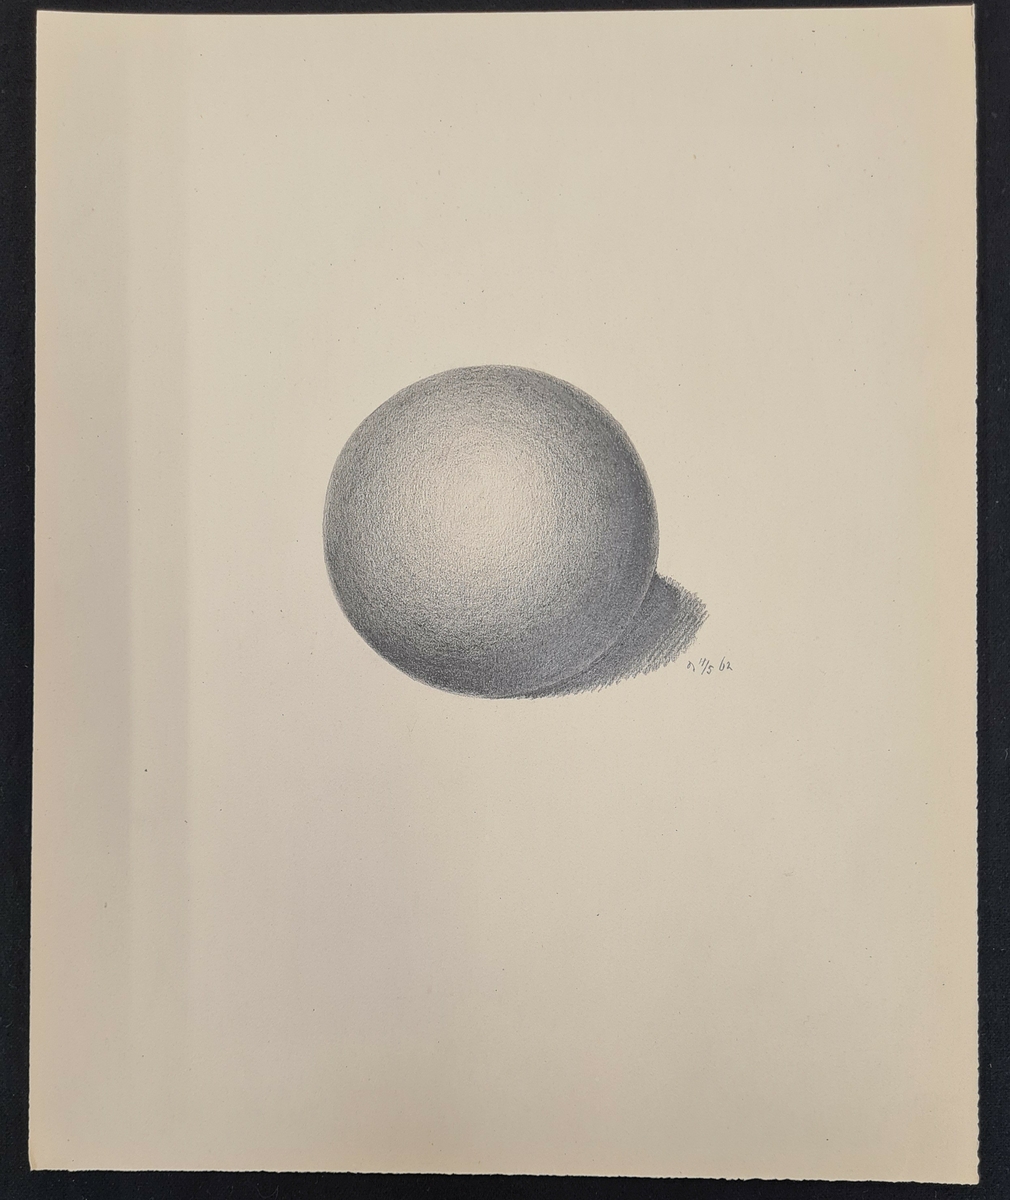 Teckning av F. A. Zettergren. En teckningsstudie av en boll. Daterad 4/5 1862.